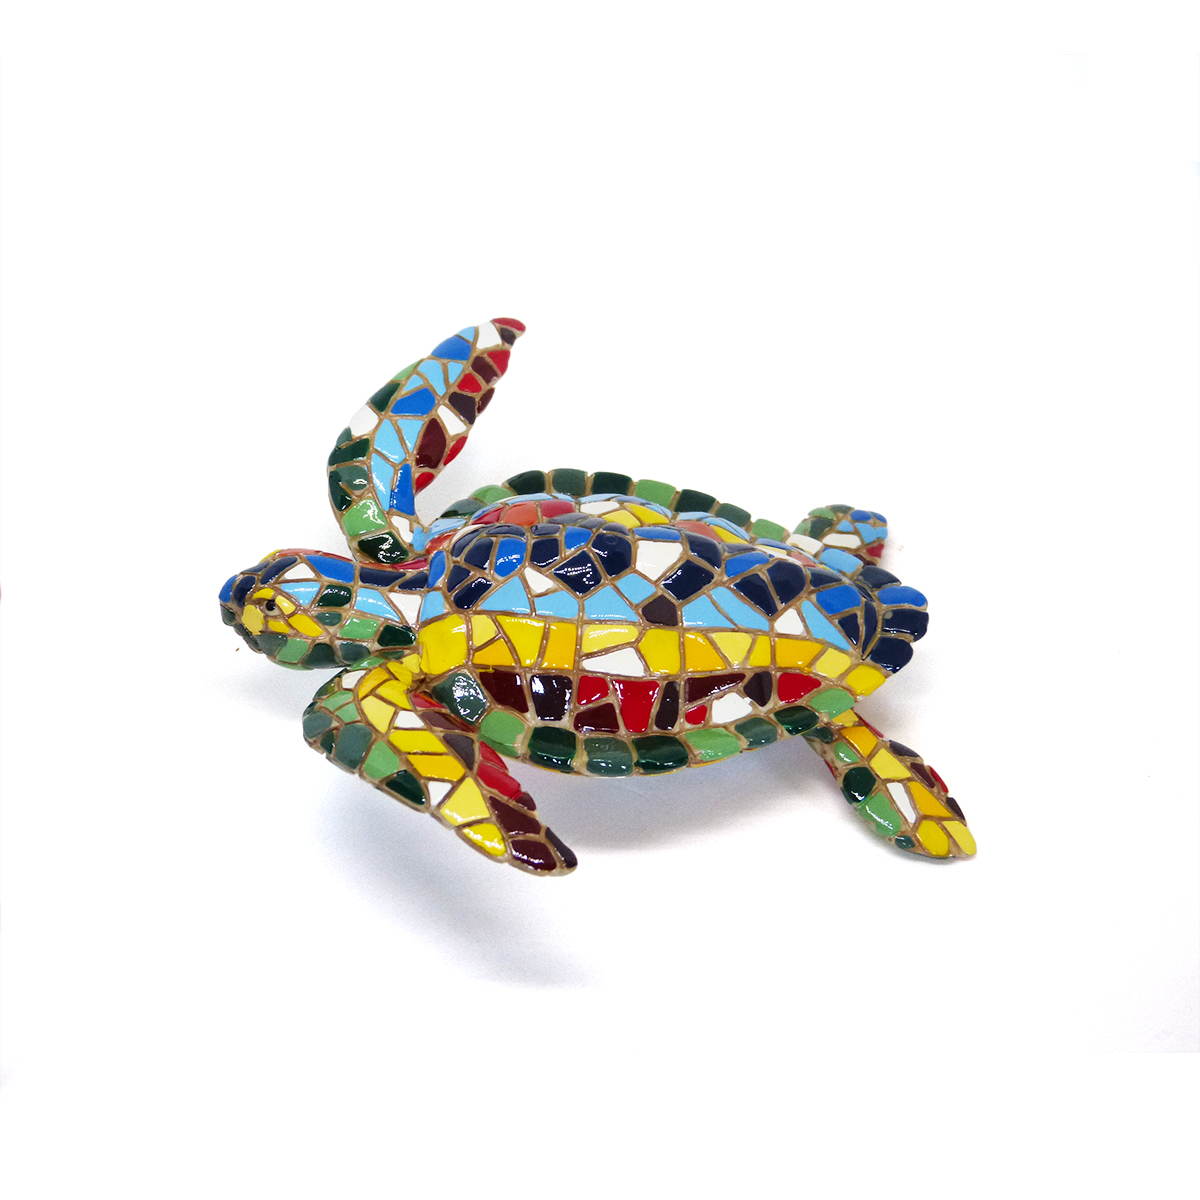 Figurine de tortue décorative Barcino Designs